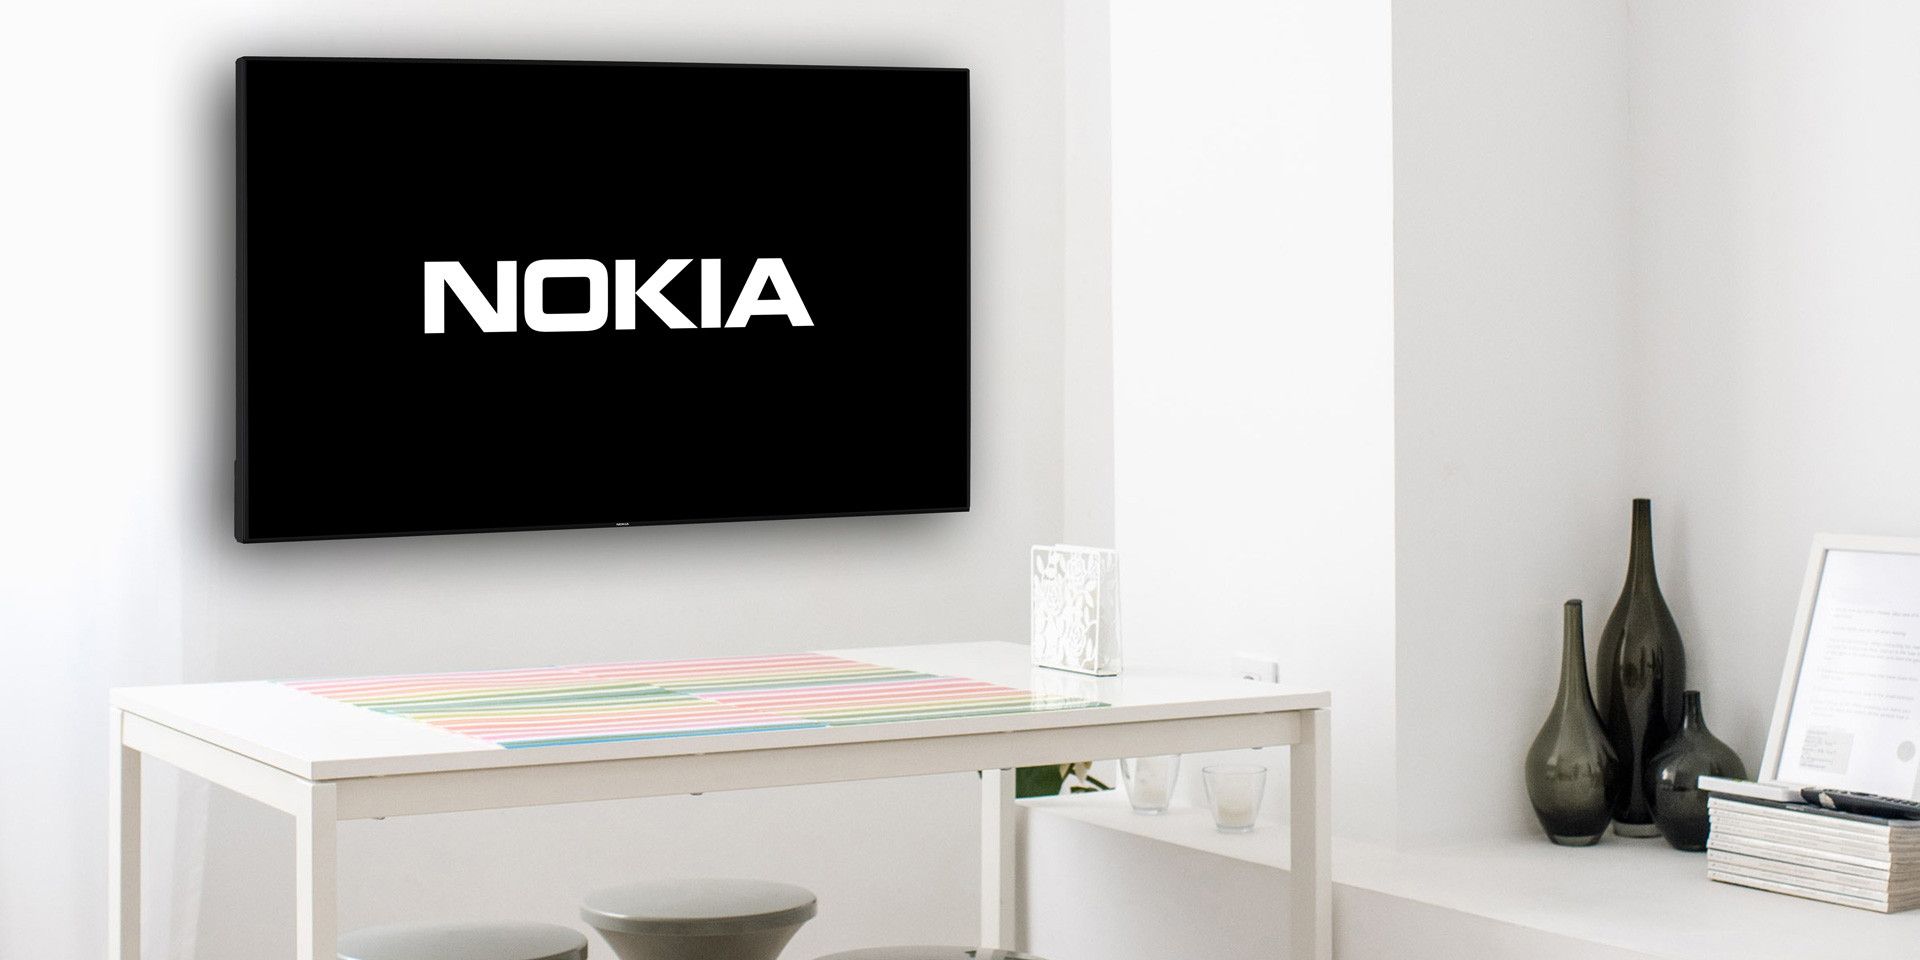 StreamView's Nokia-branded TV